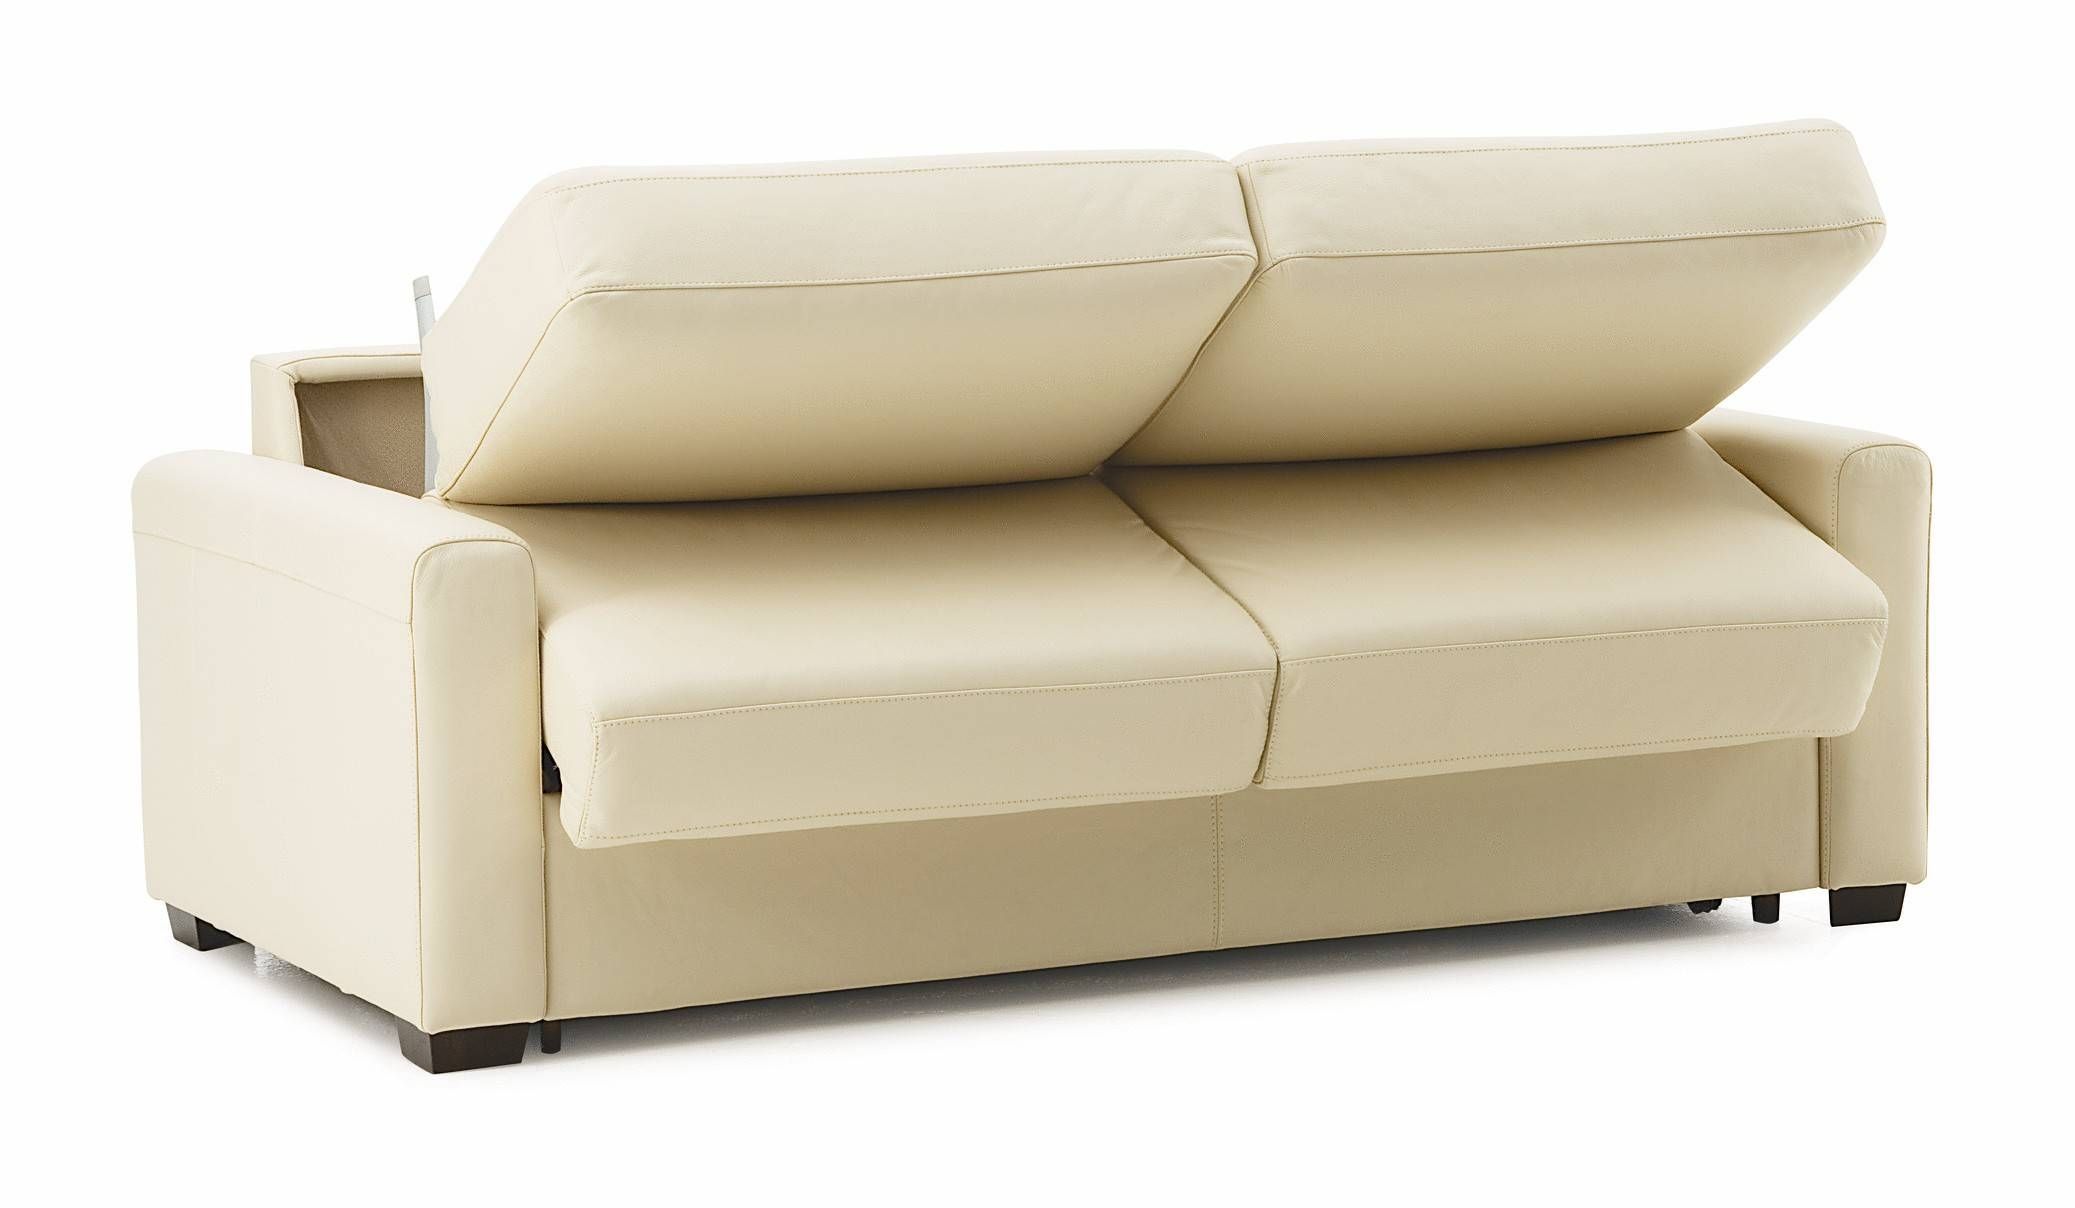 Sofas Center : Air Dream Sofa Sleeper Queen Sizettress Sheet Regarding Queen Size Sofa Bed Sheets (View 10 of 30)